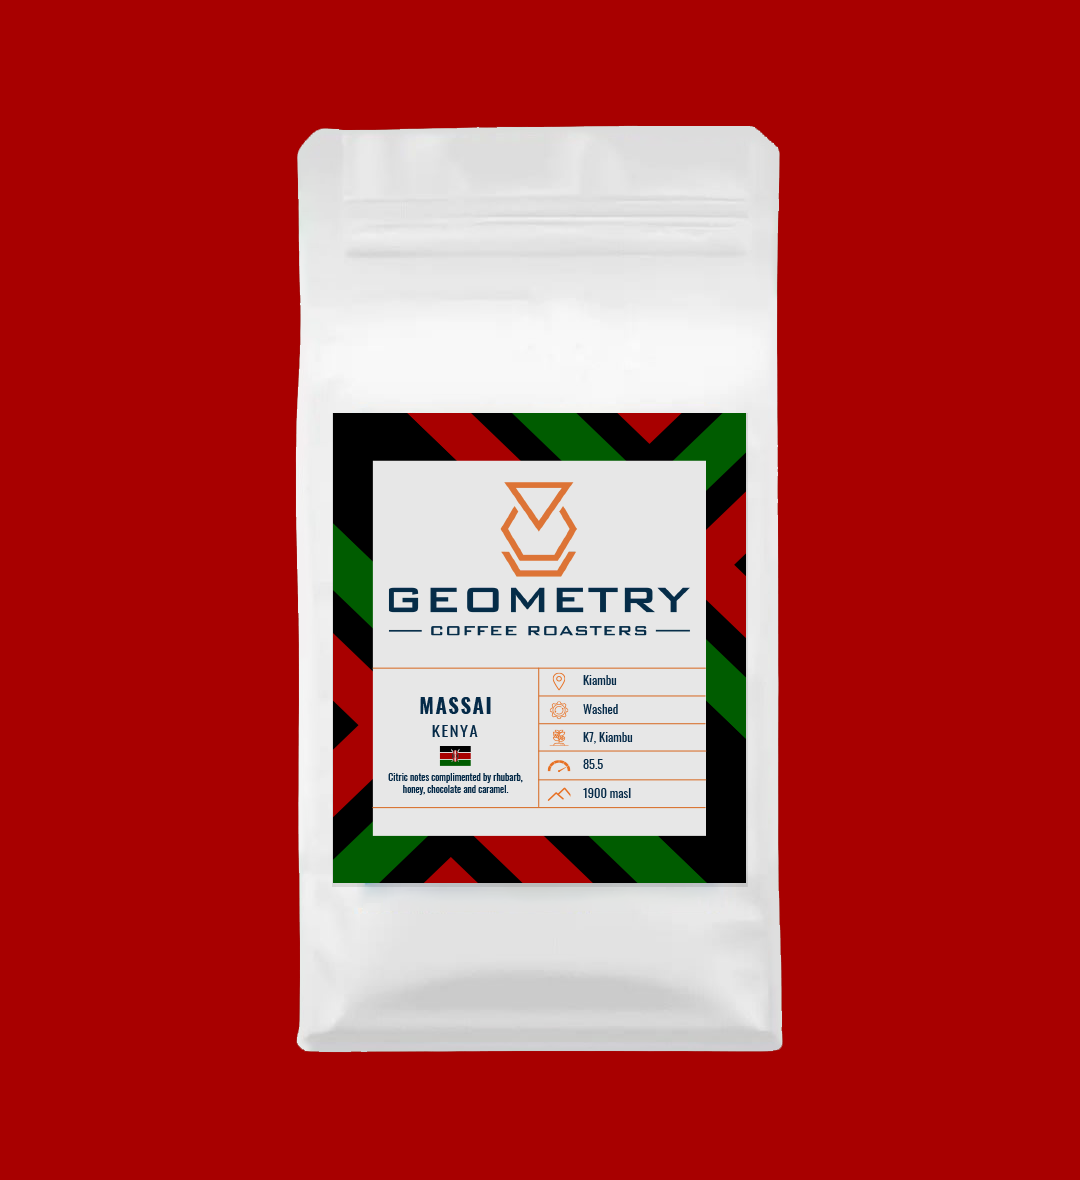 Geometry Coffee Roasters Kenya Massai red background